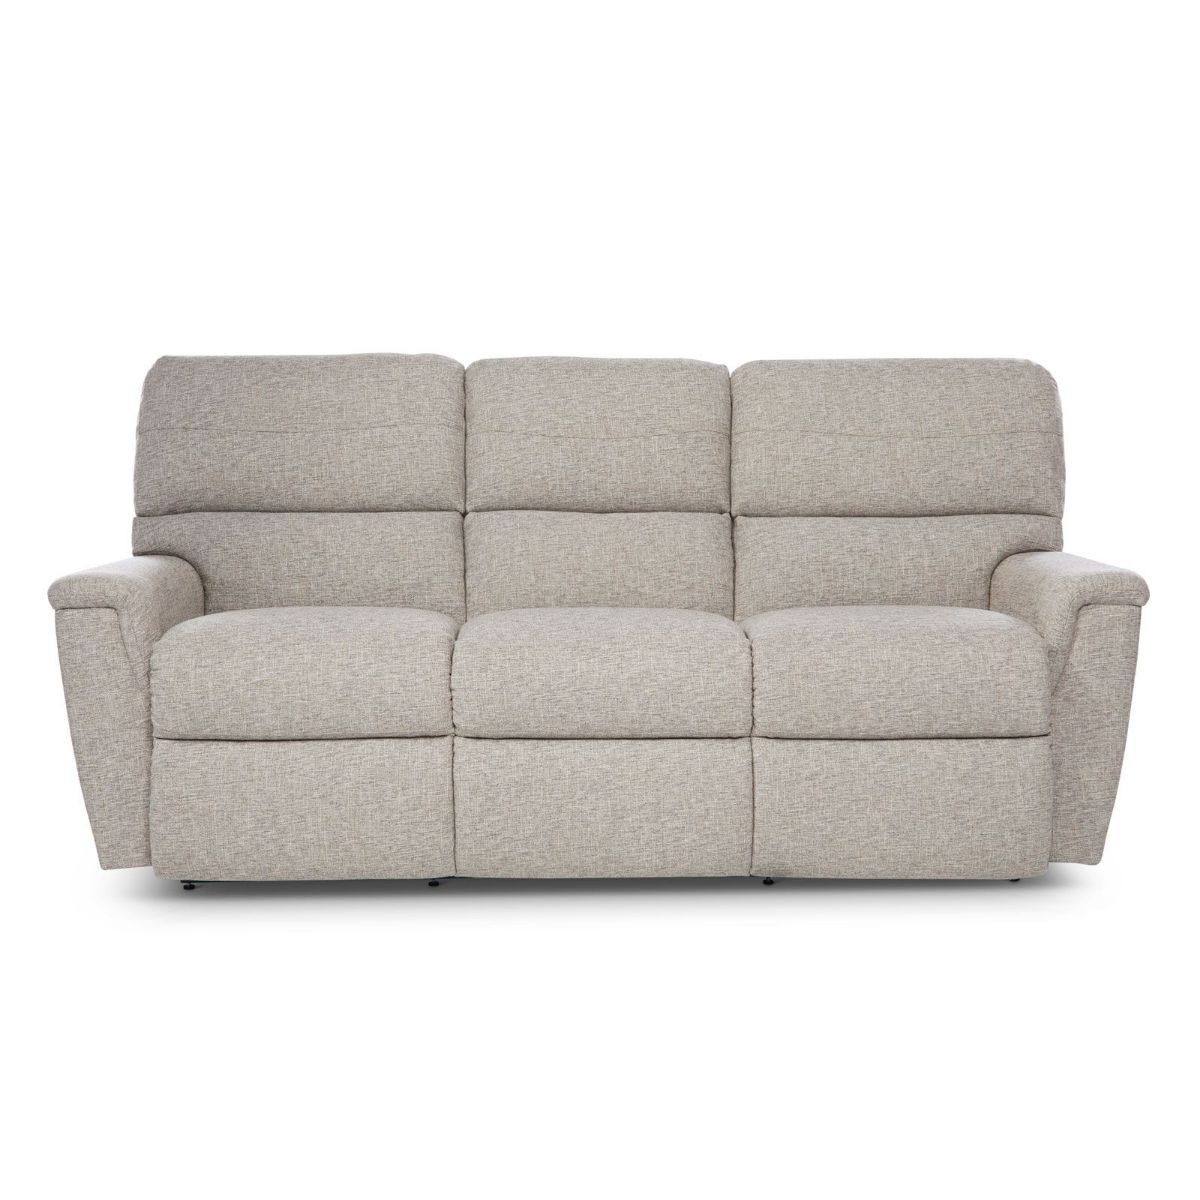 Picture of Ava Whisper Recliner Sofa